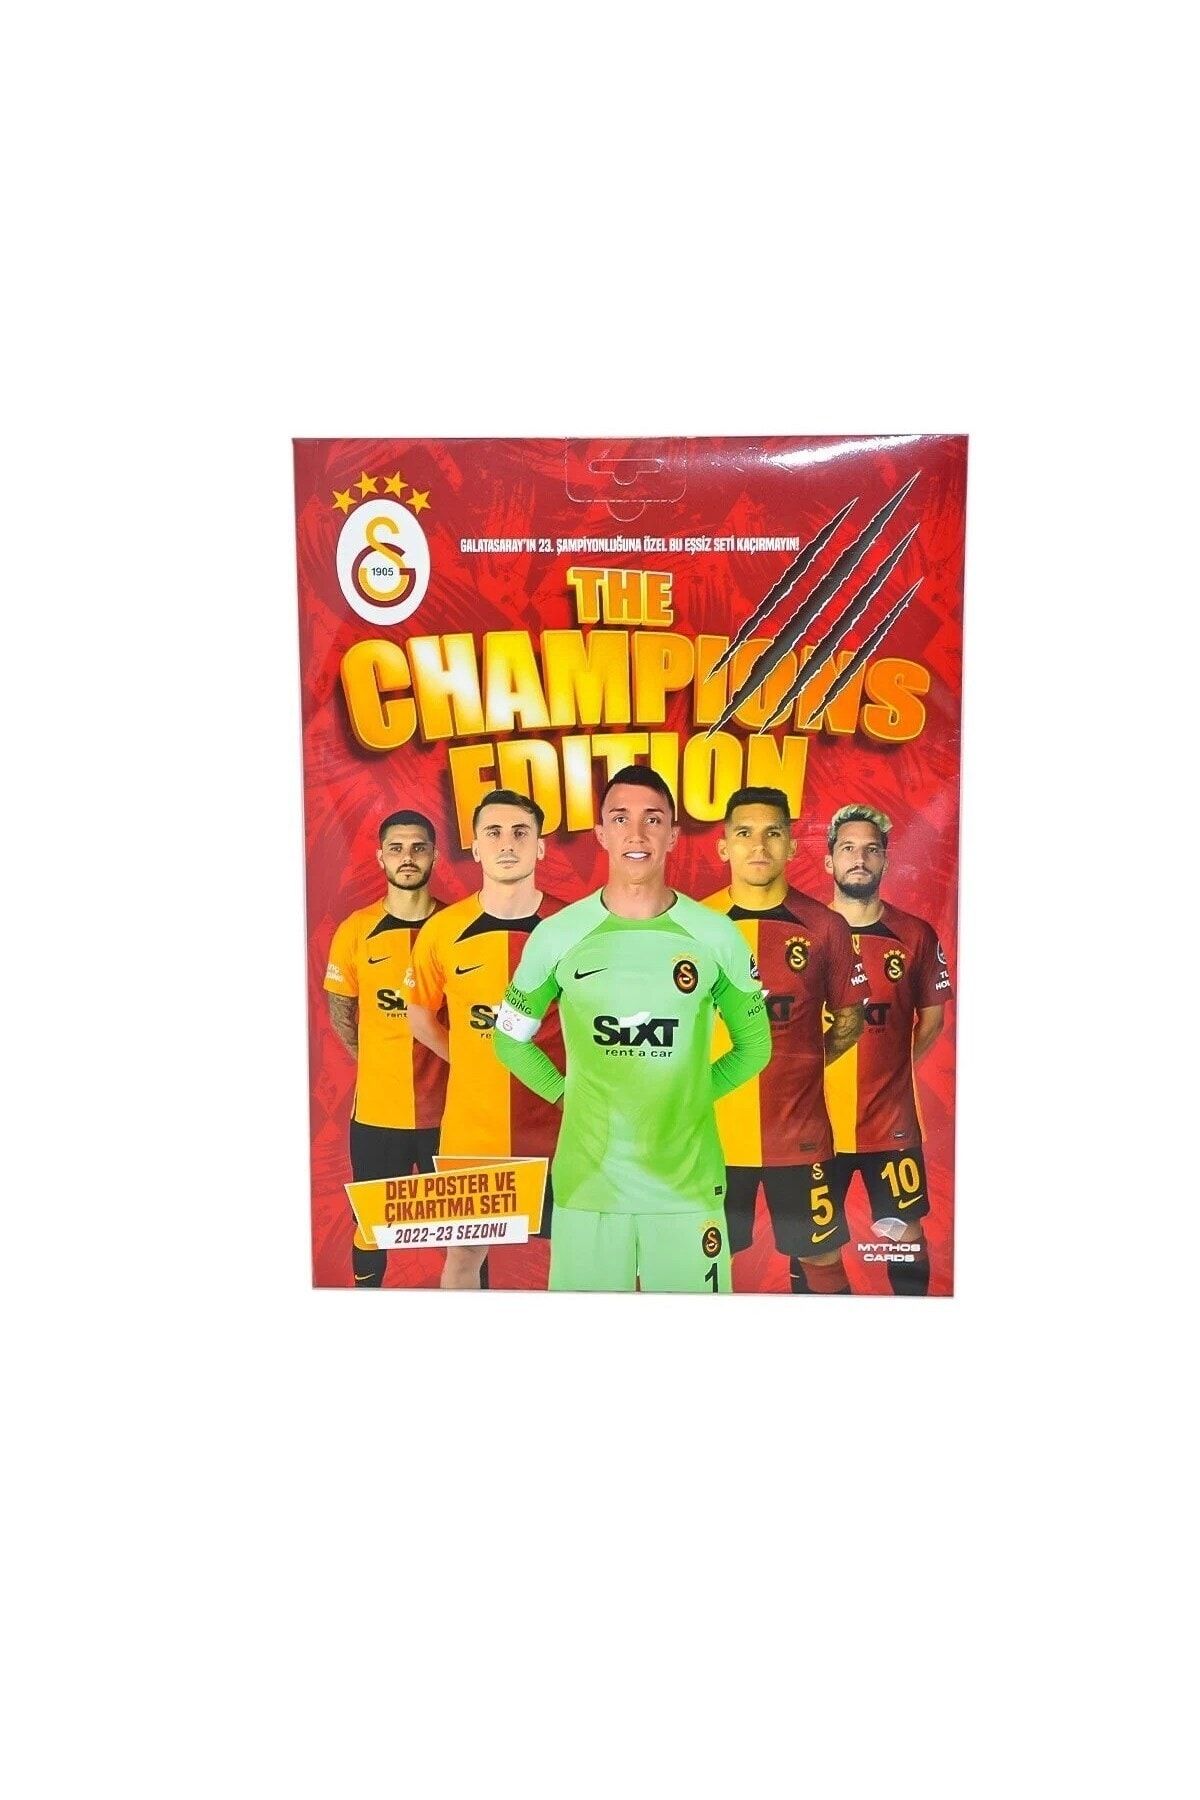 Mythos Cards Başel Toys 0310 Galatasaray The Champions Edition Dev Poster ve Çıkartma Seti